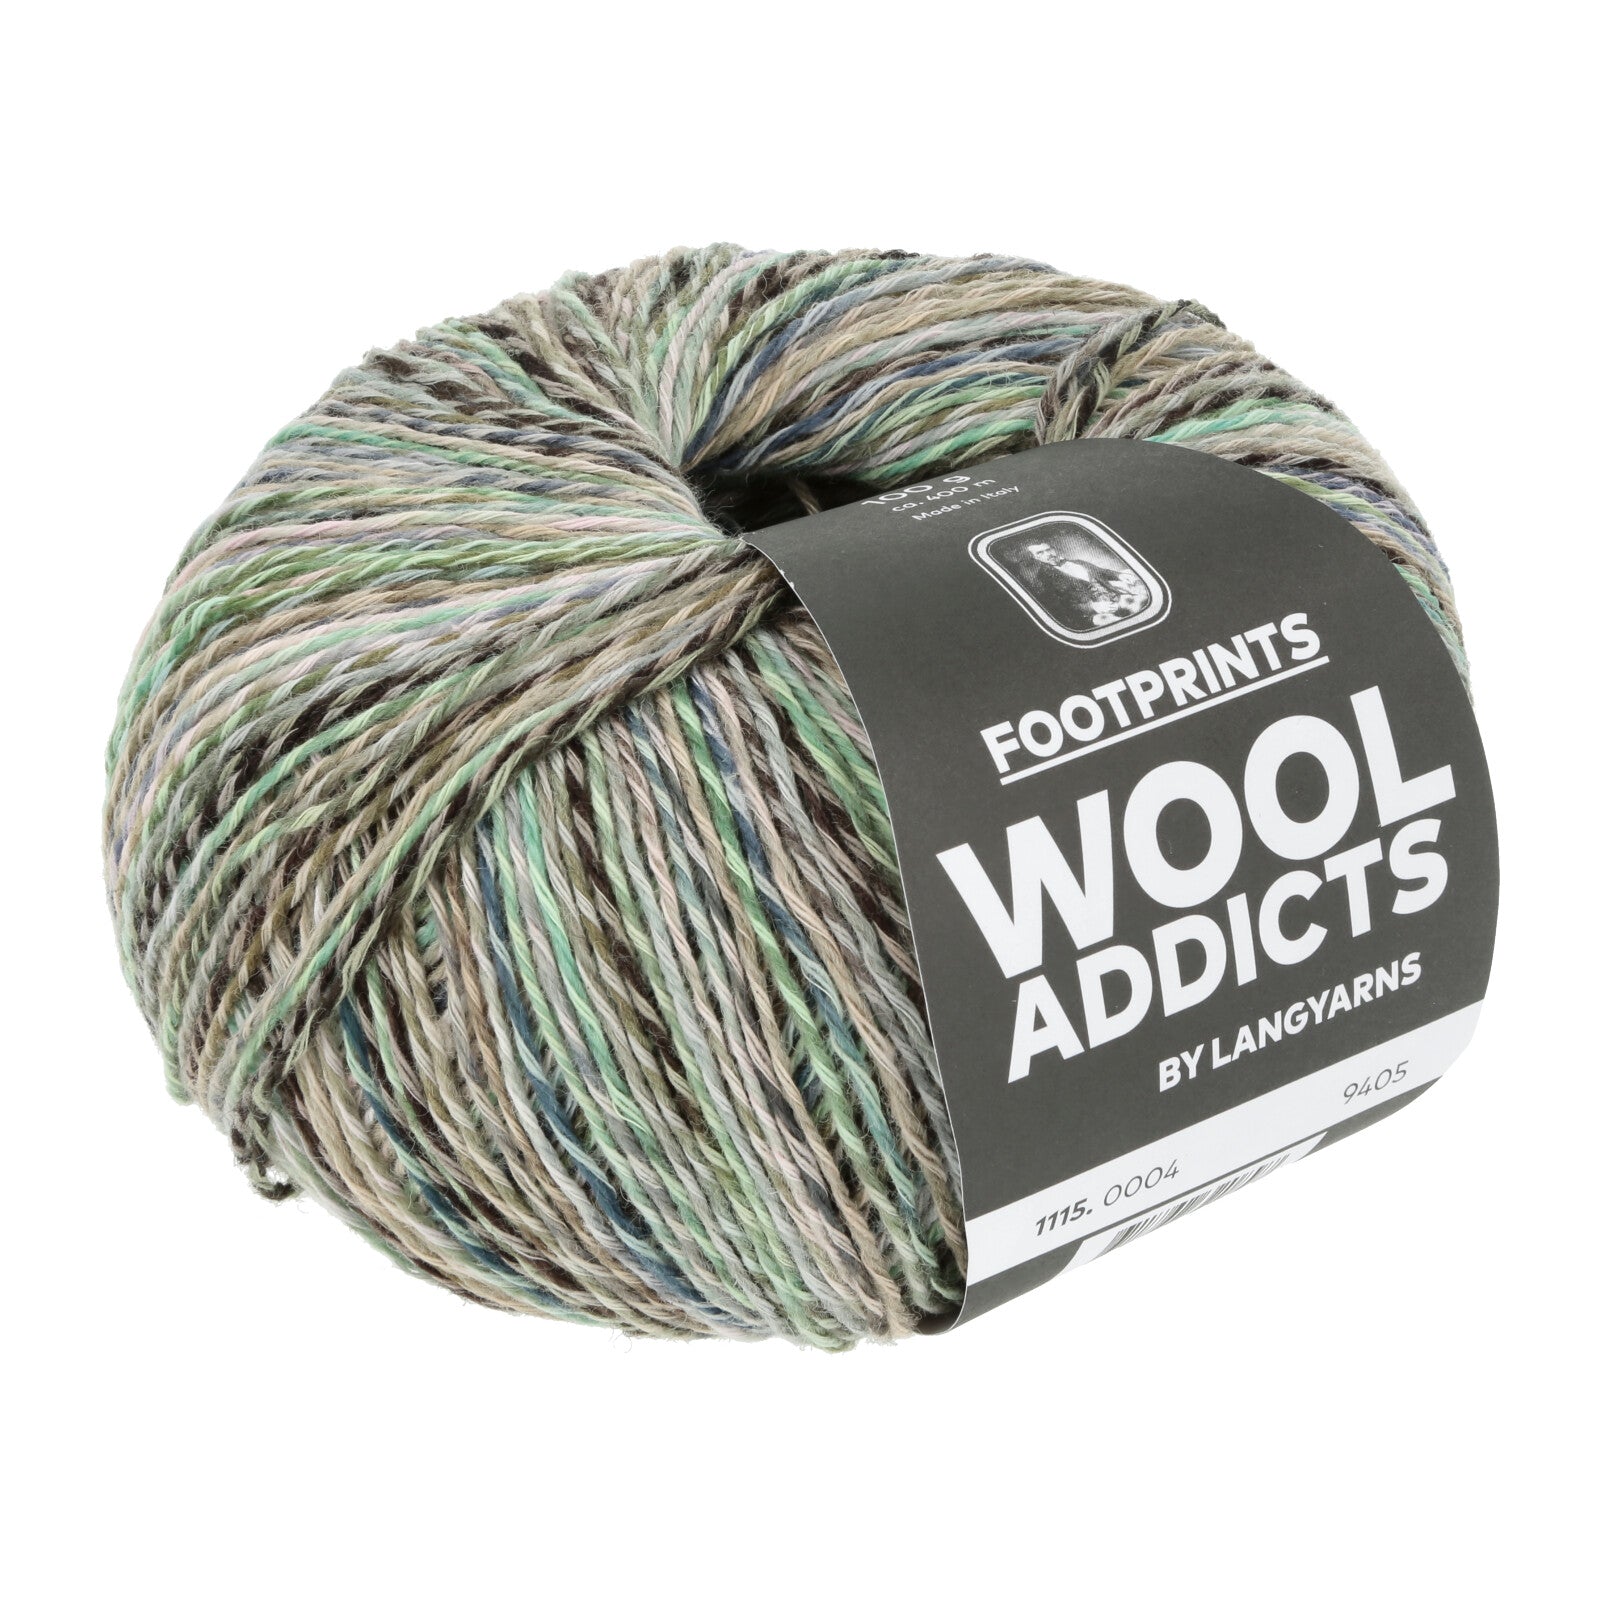 WoolAddicts Footprints yarn color Four